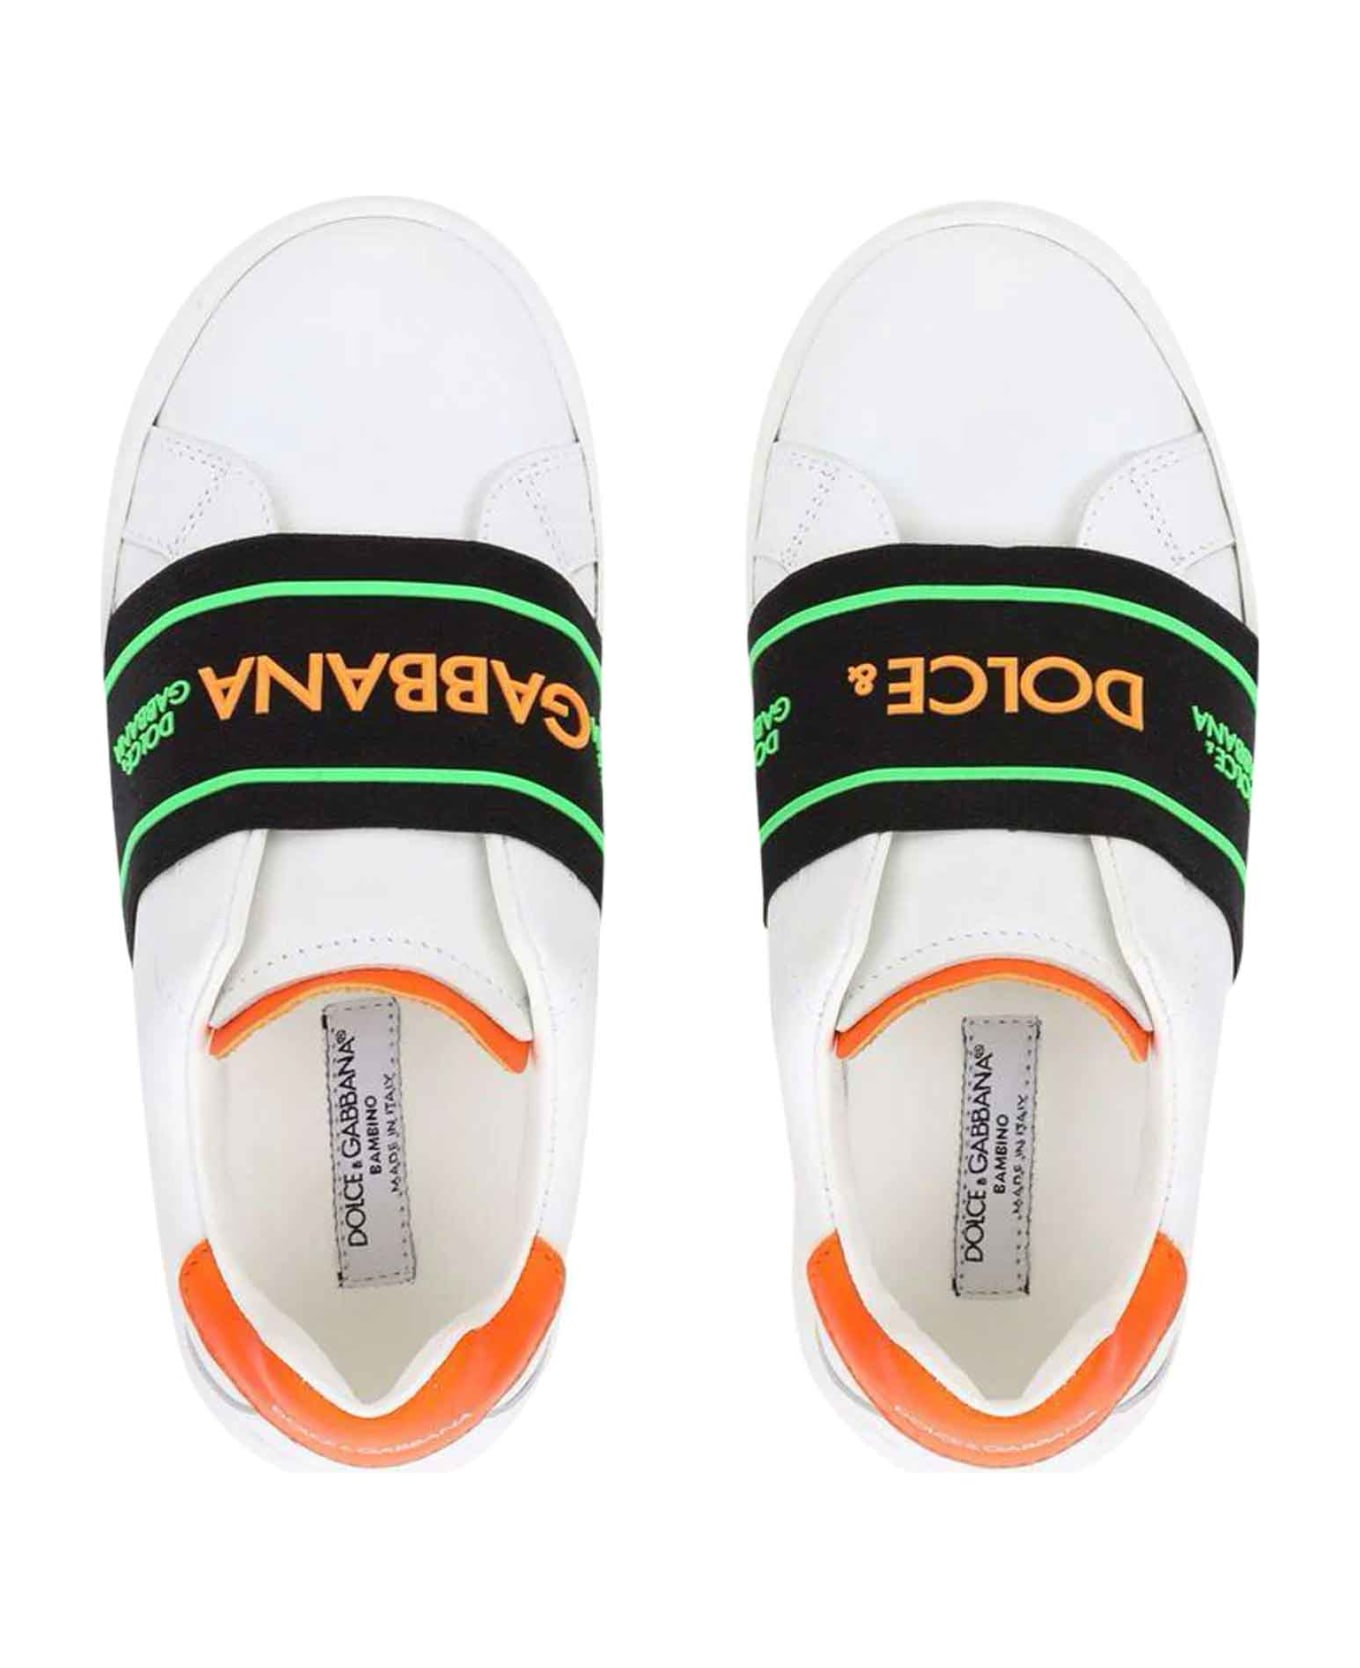 Dolce & Gabbana White Unisex Sneakers Dolce&gabbana Kids - Bianco/arancio/nero